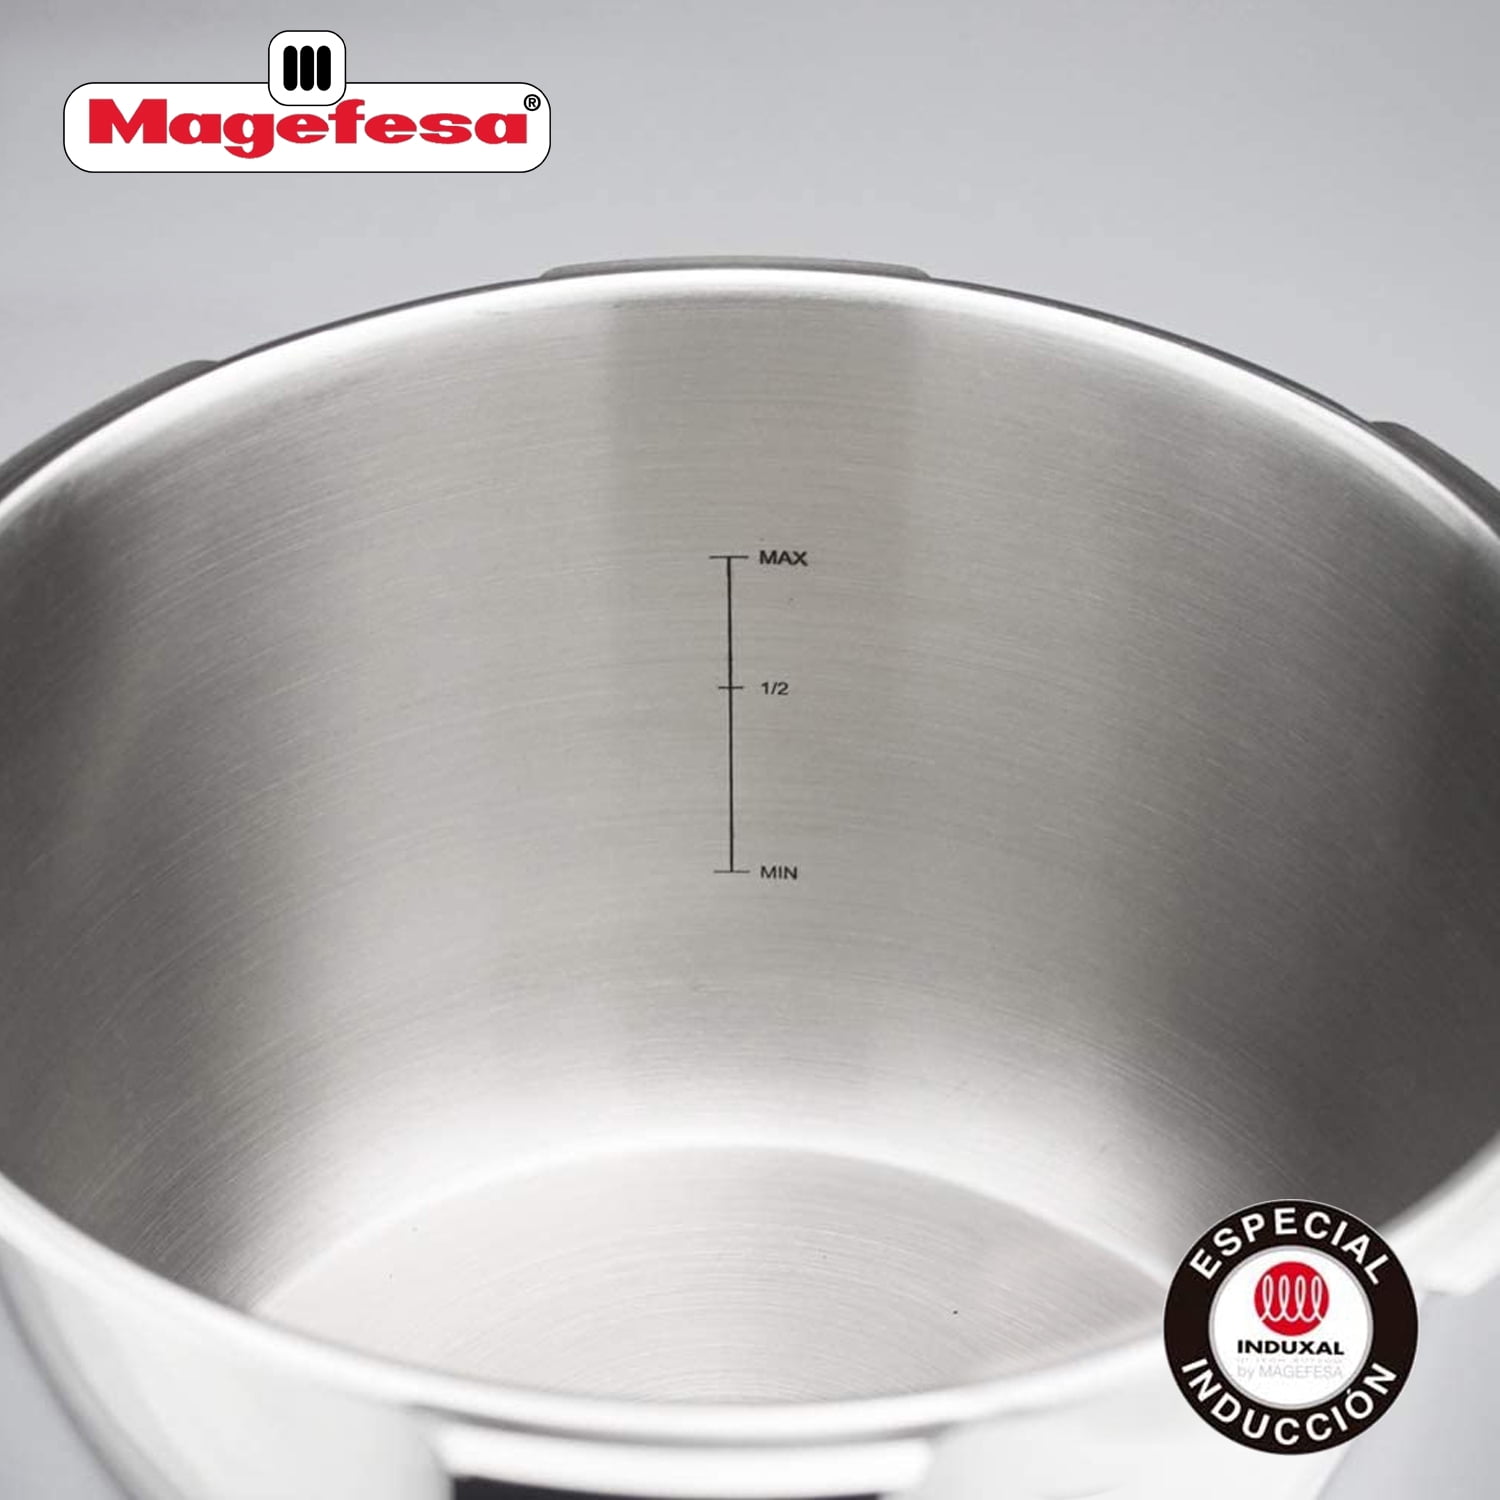 MAGEFESA Chef Pressure Cooker has a Thermodiffusion bottom, 3 Security  Systems. 16 Quarts